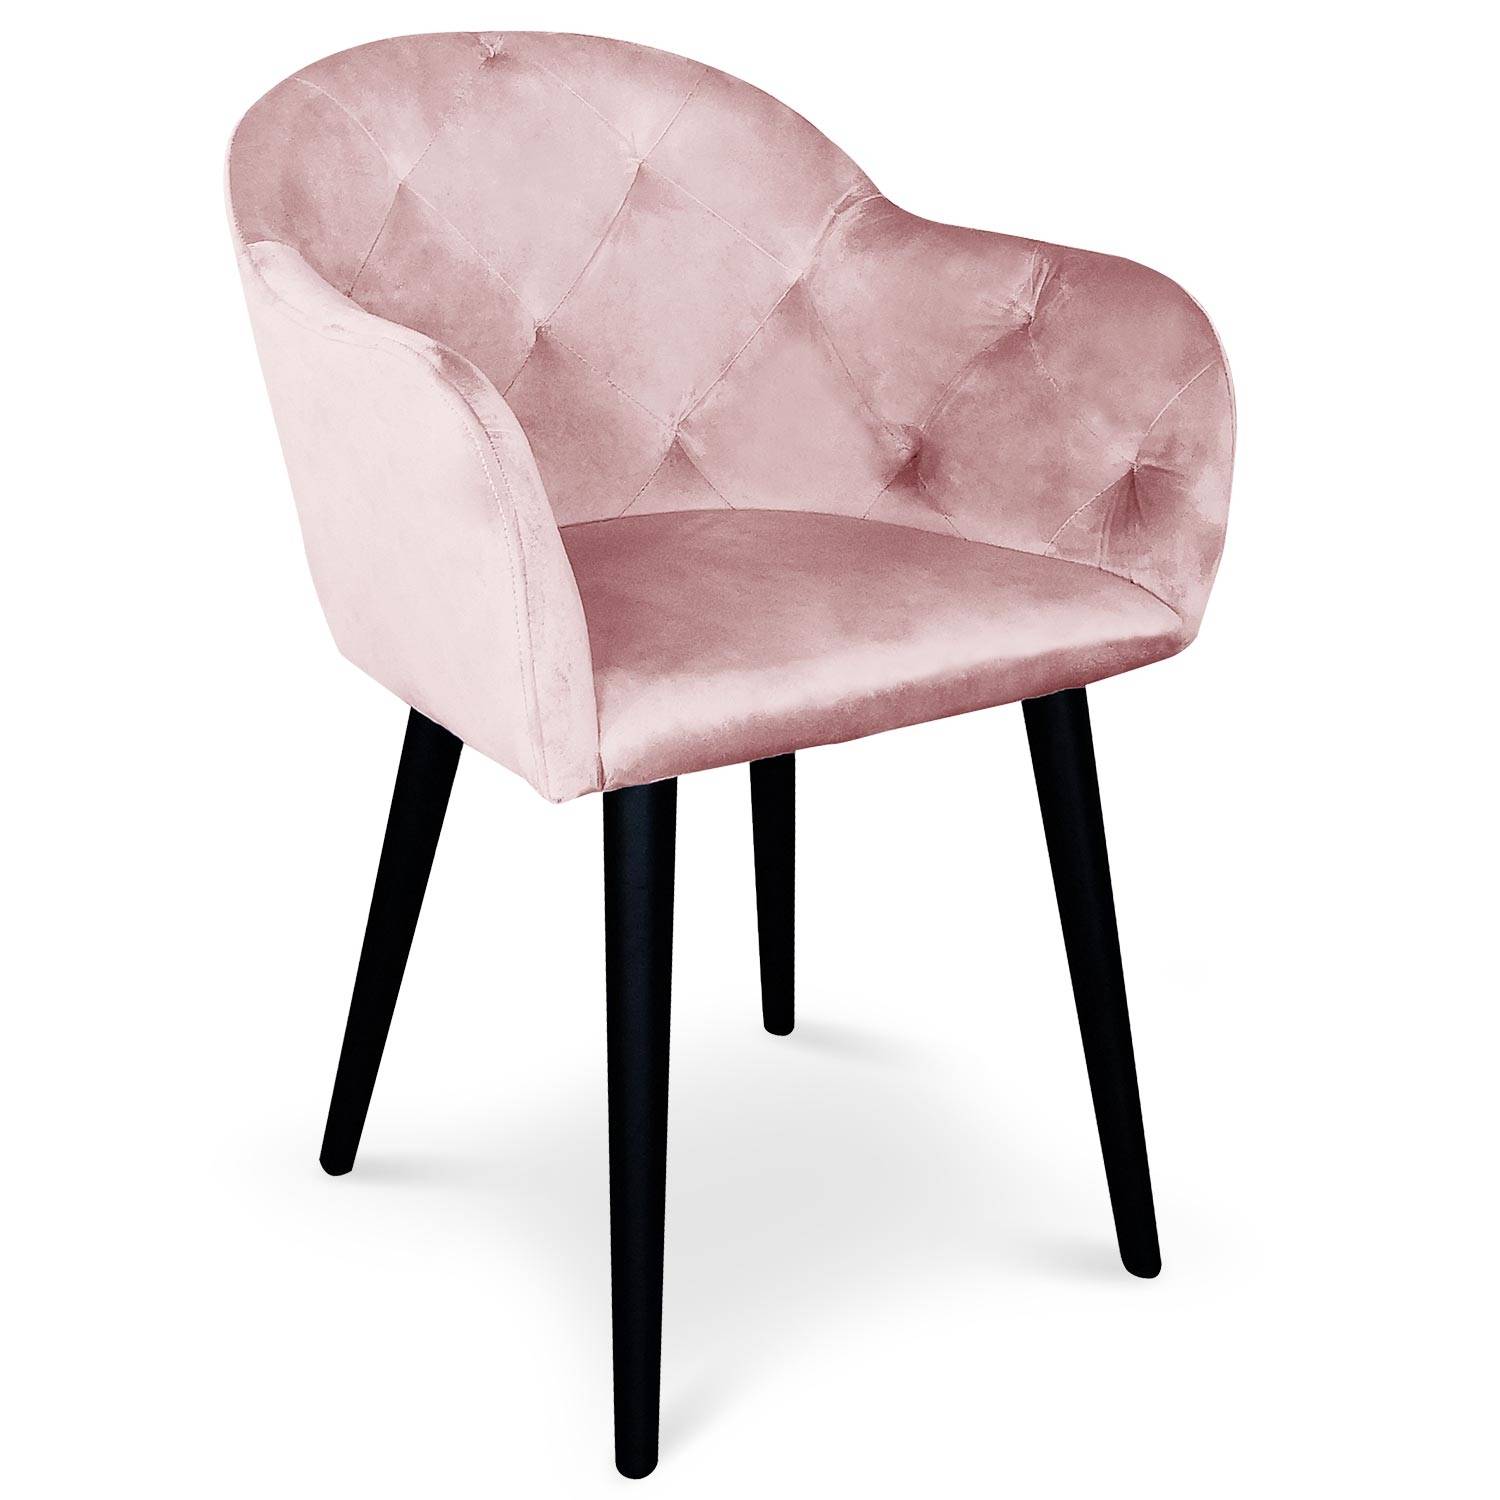 gerucht ik draag kleding molen Honorine stoel / fauteuil roze fluweel